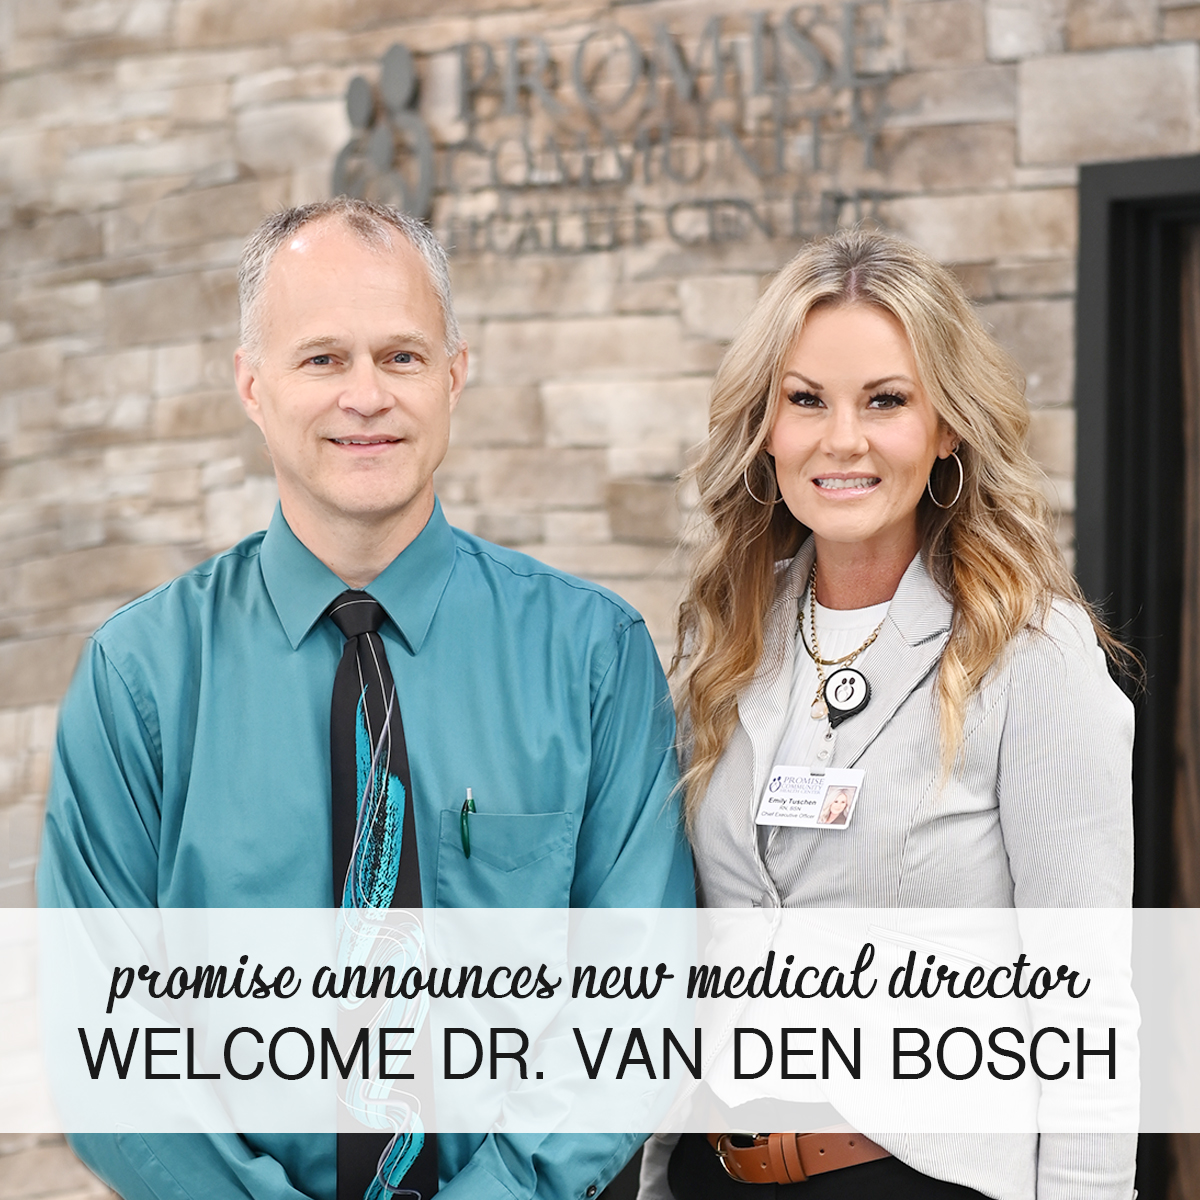 Dr. Vanden Bosch, MD - Medical Director at Promise Community Health Center in northwest Iowa